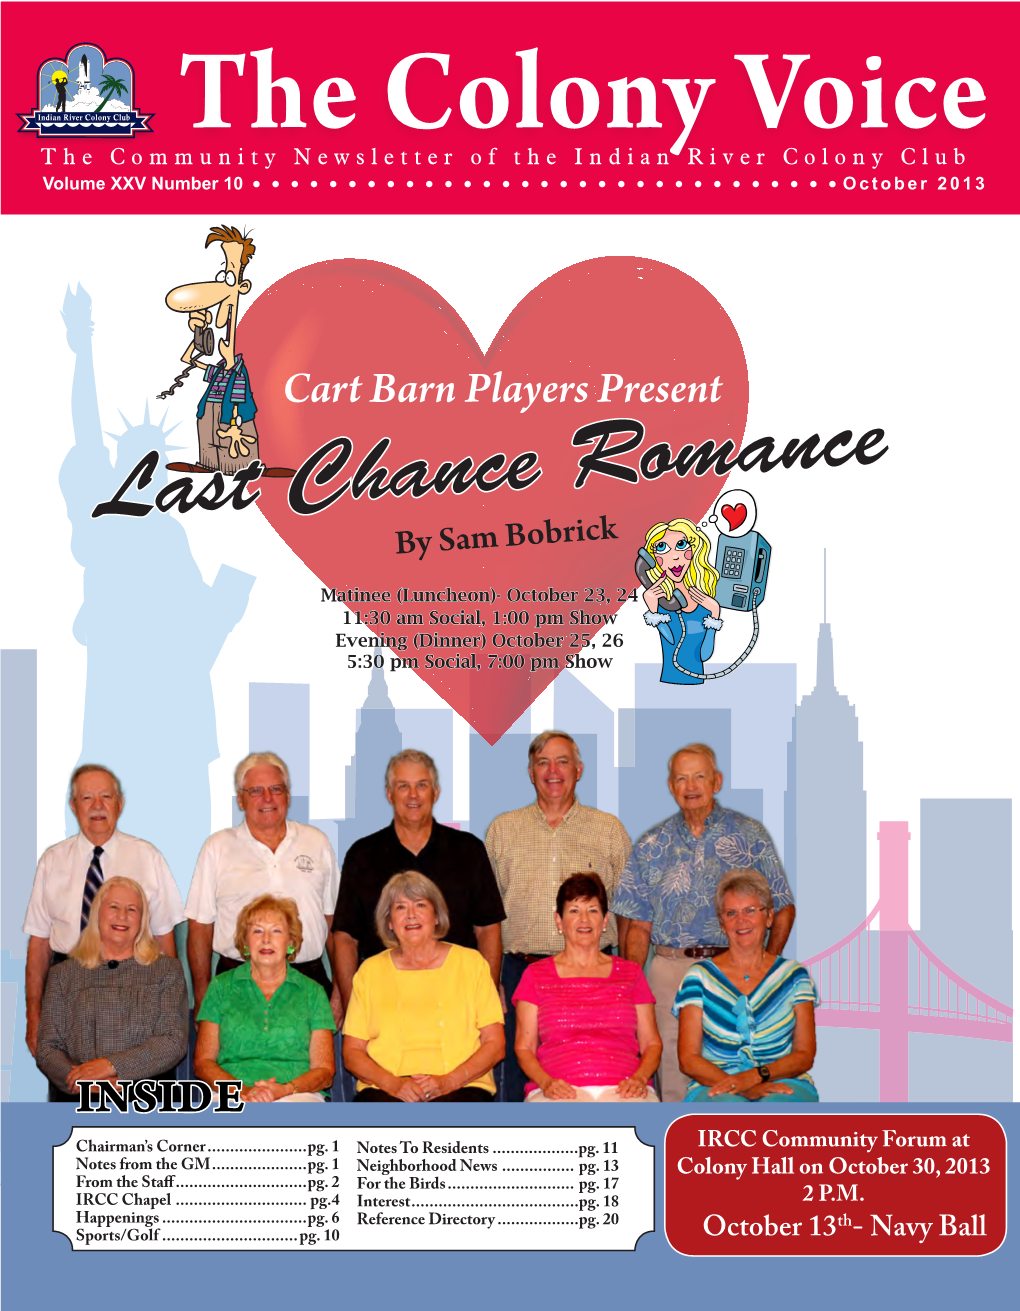 Last Chance Romance by Sam Bobrick